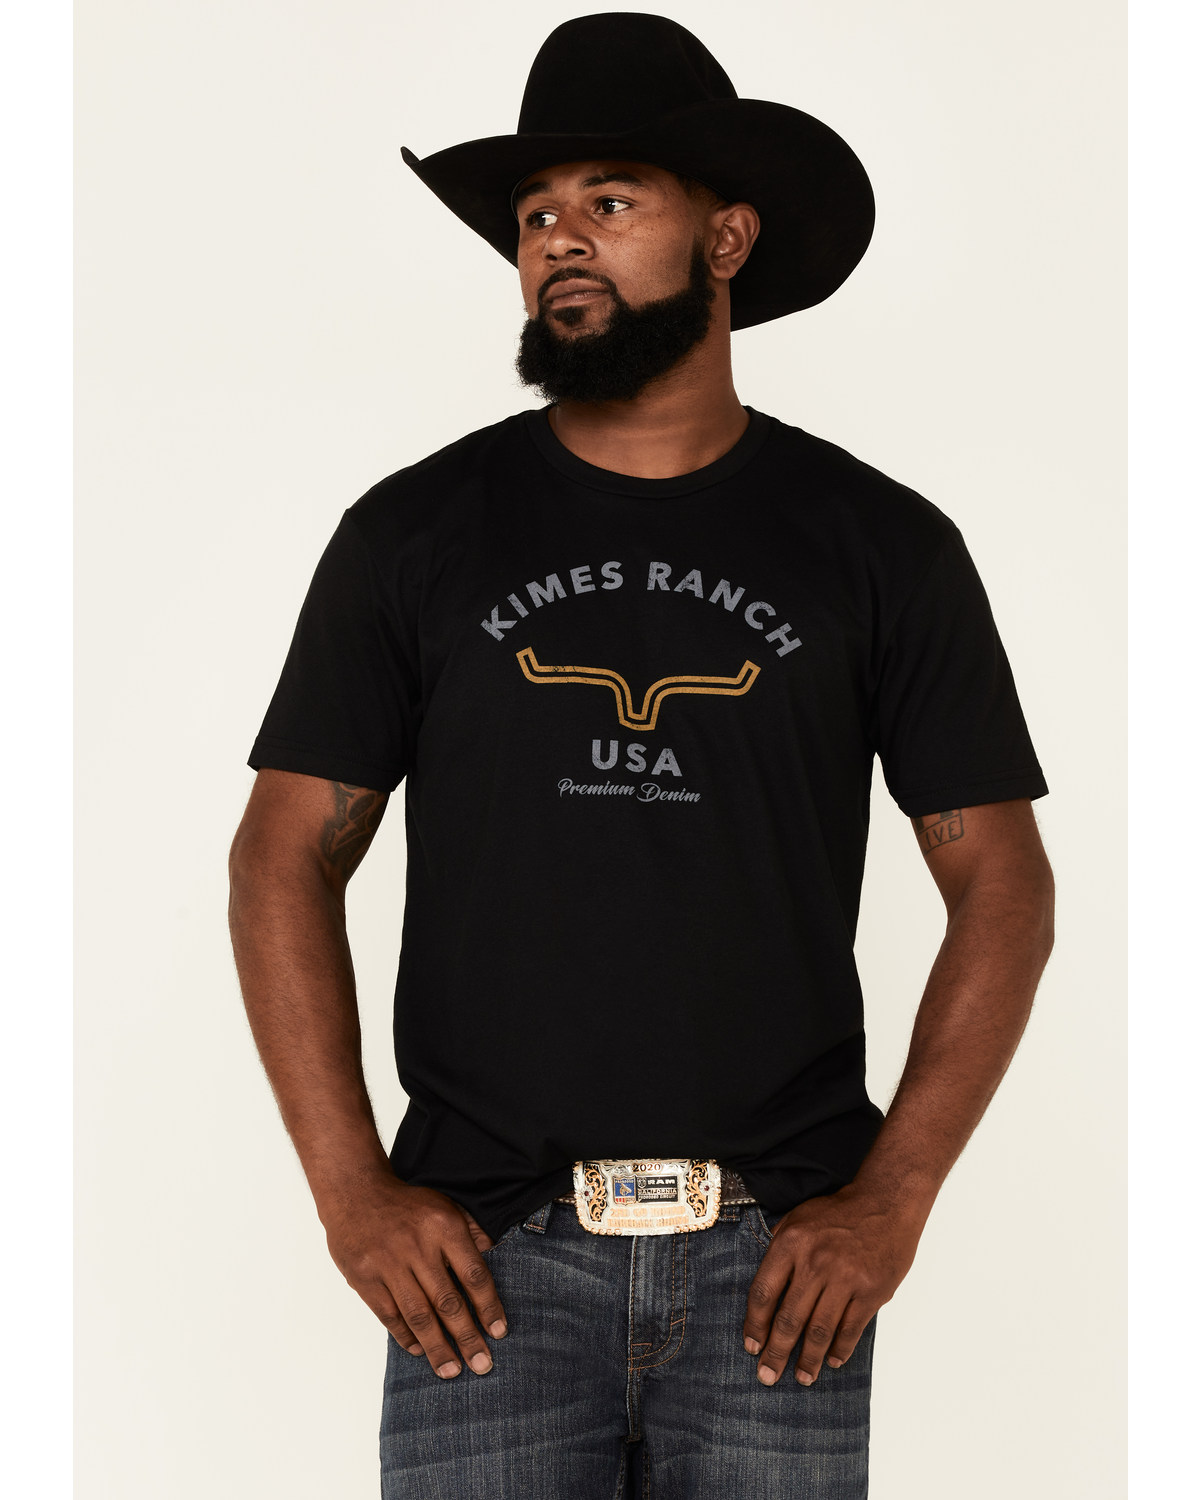 Kimes Ranch Men's Arch Logo Short Sleeve T-Shirt